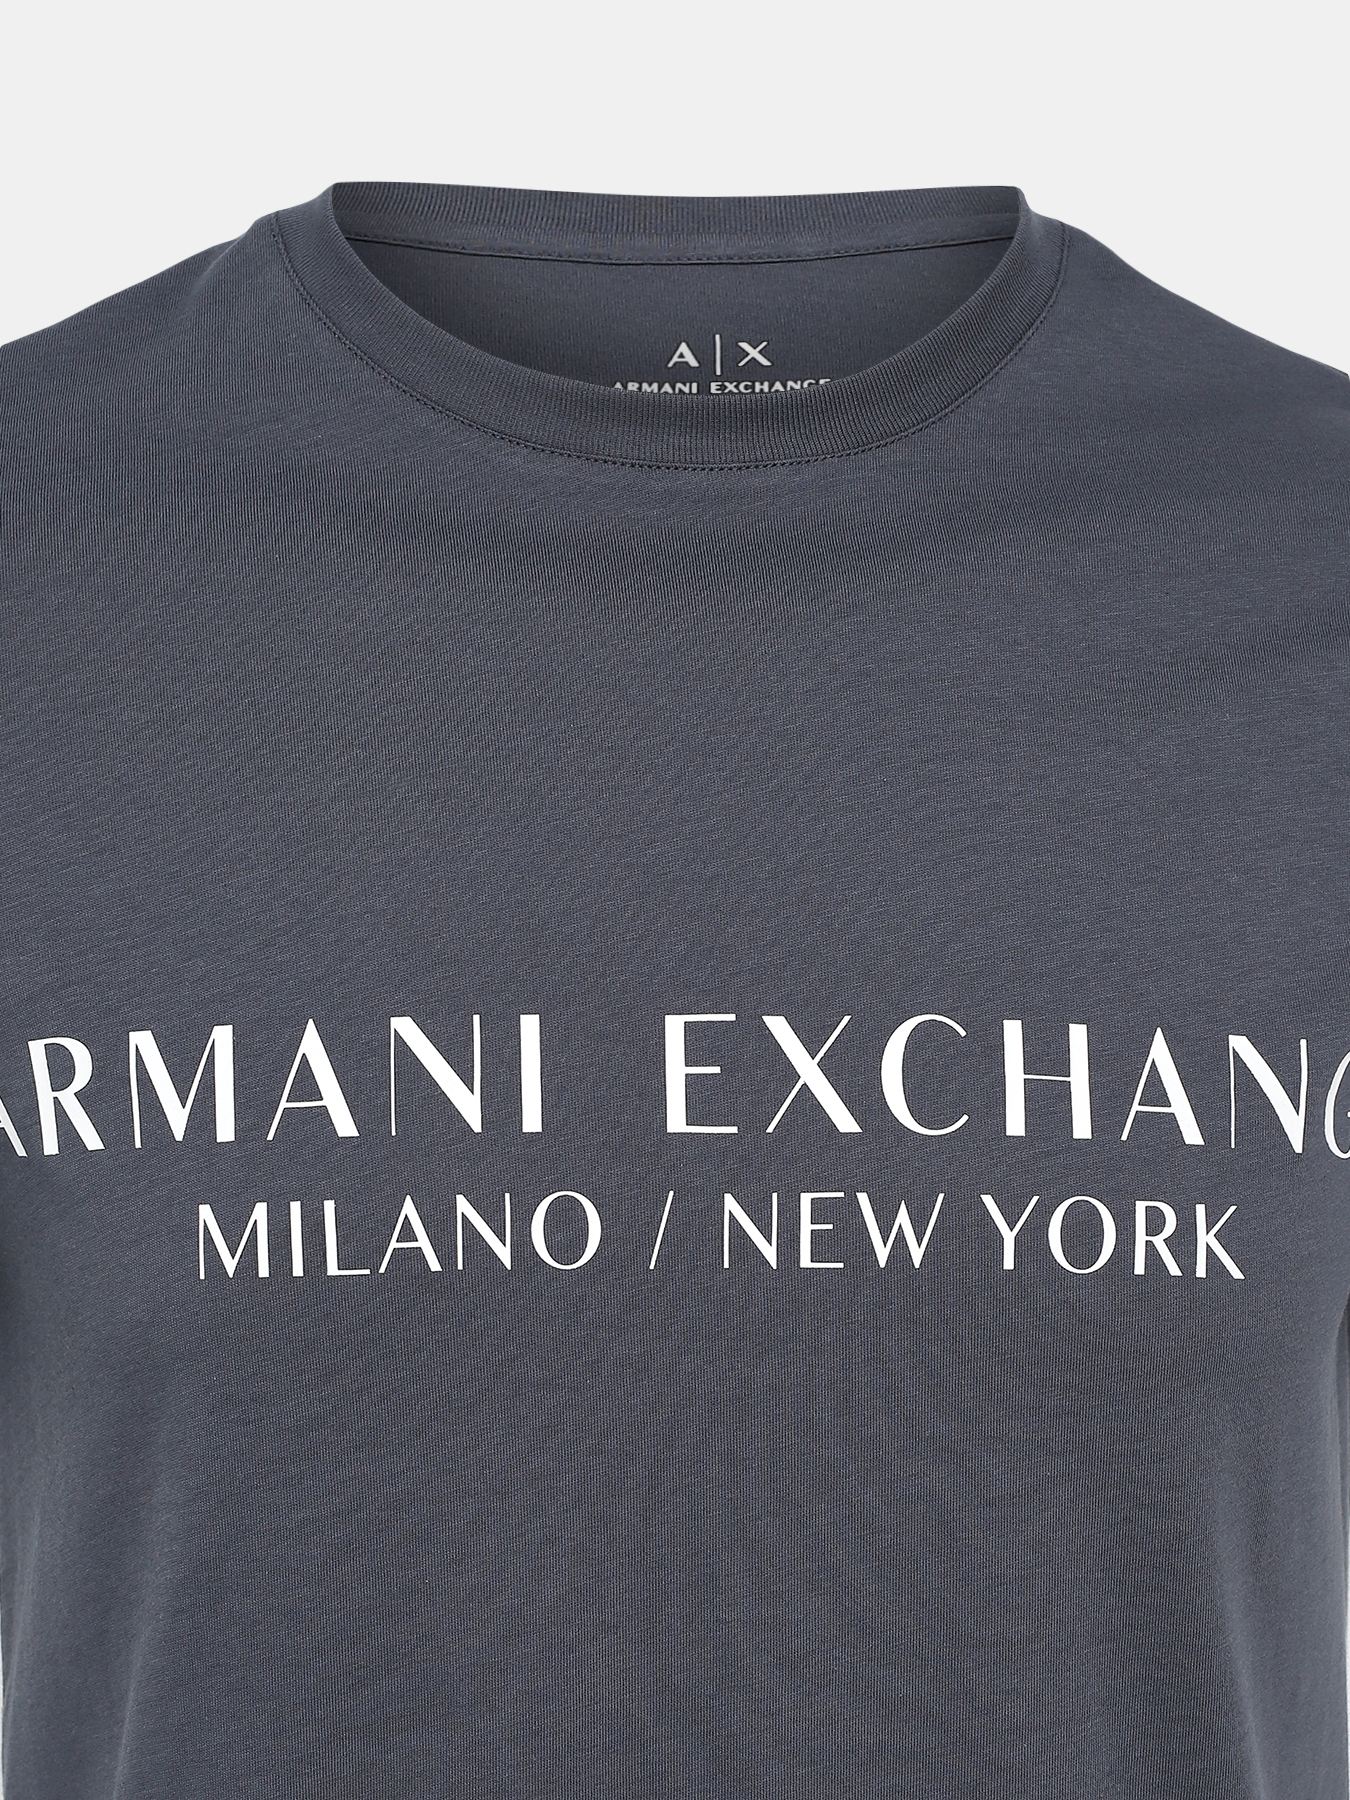 Футболка Armani Exchange 422425-043, цвет темно-серый, размер 48-50 - фото 3